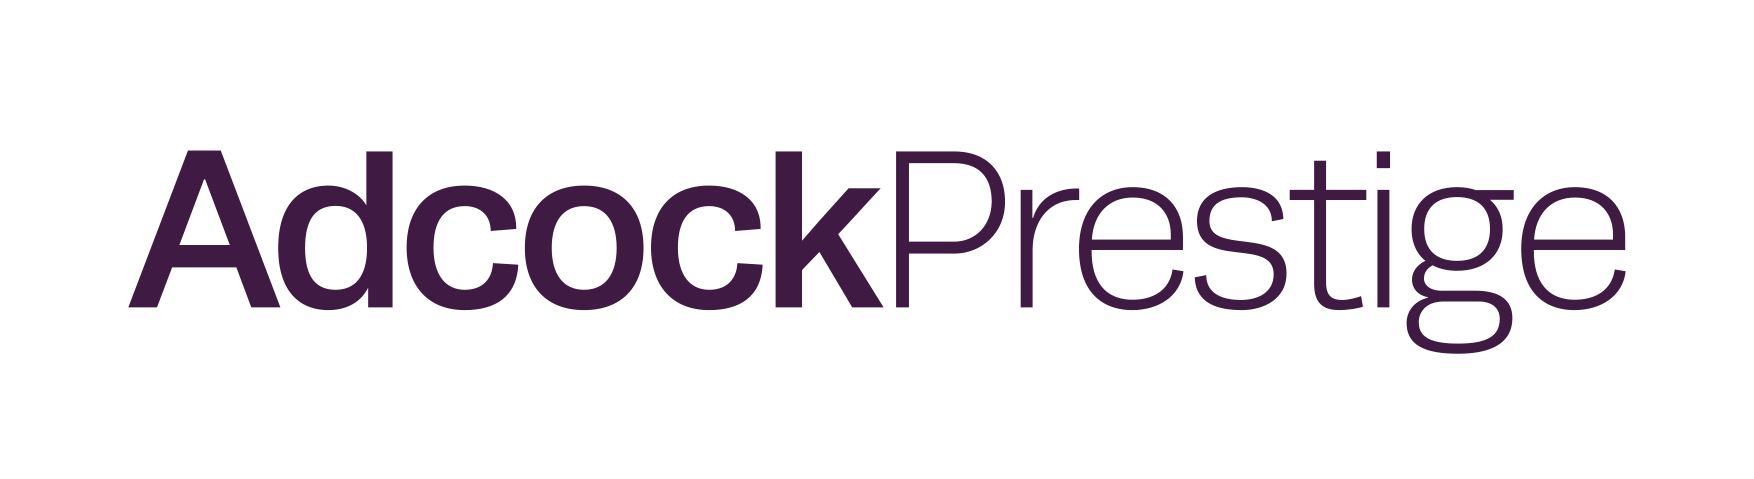 Adcock Prestige logo